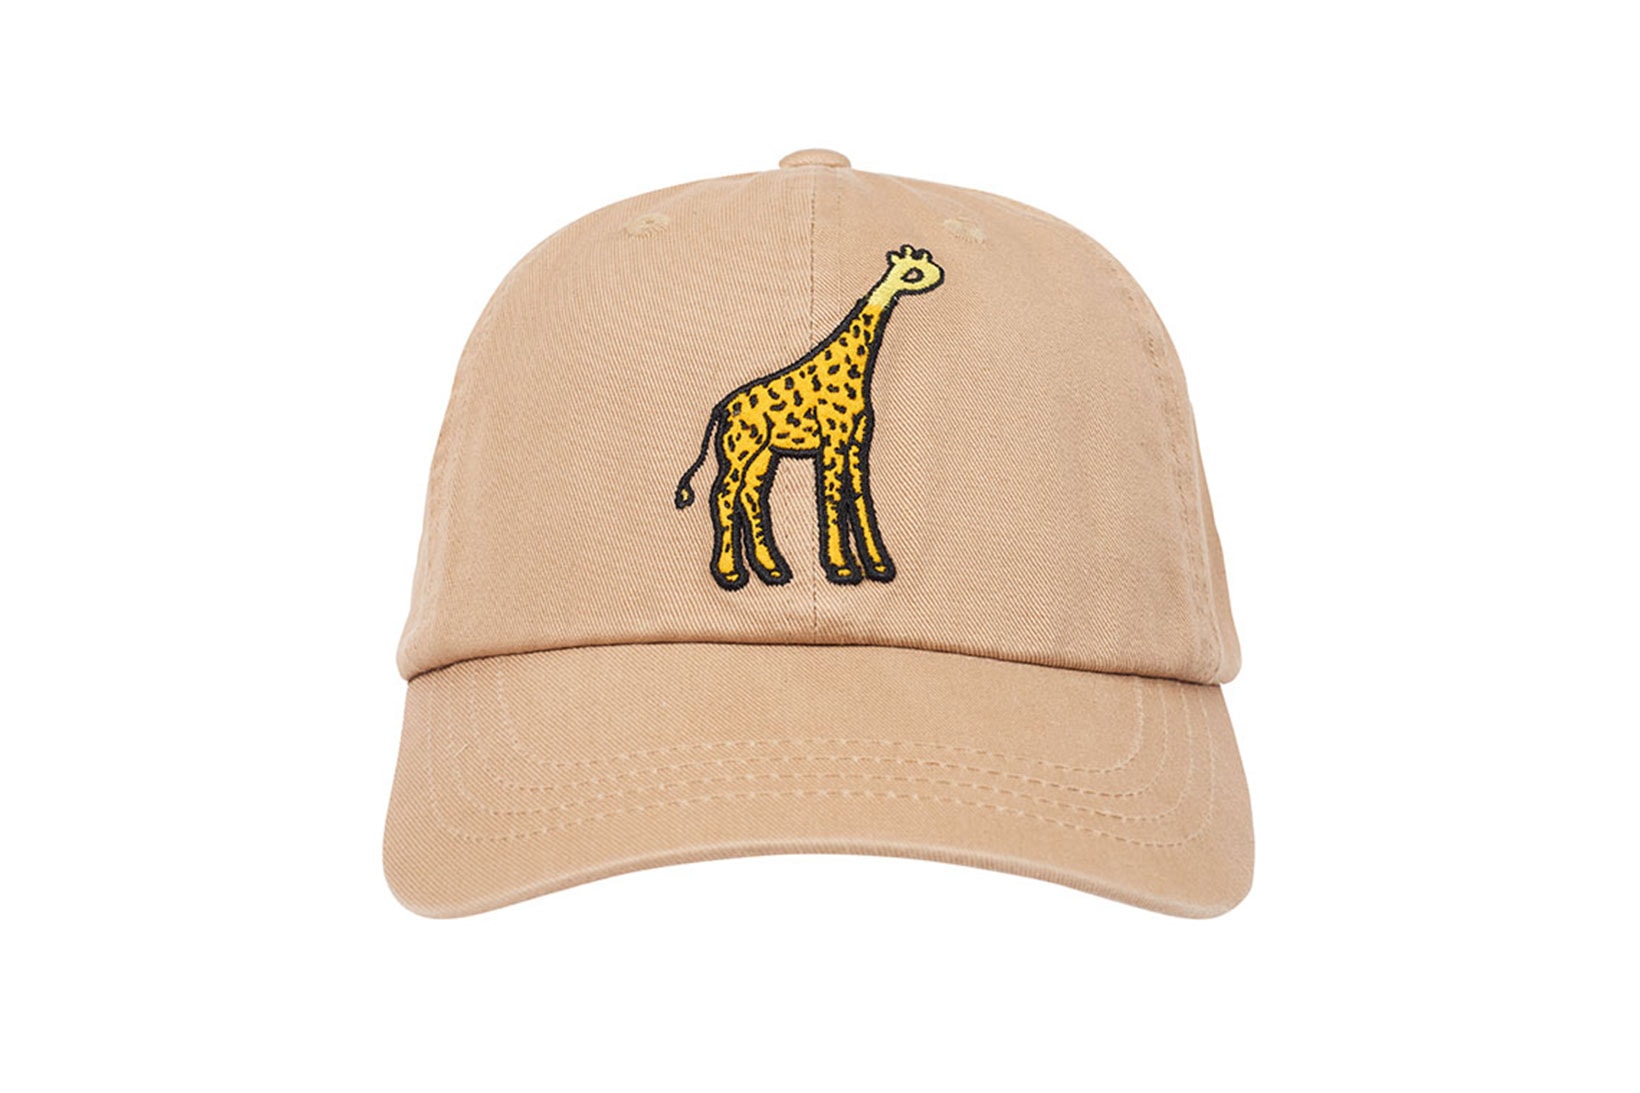 palace spring drop 4 collection logo cap hat graphic giraffe